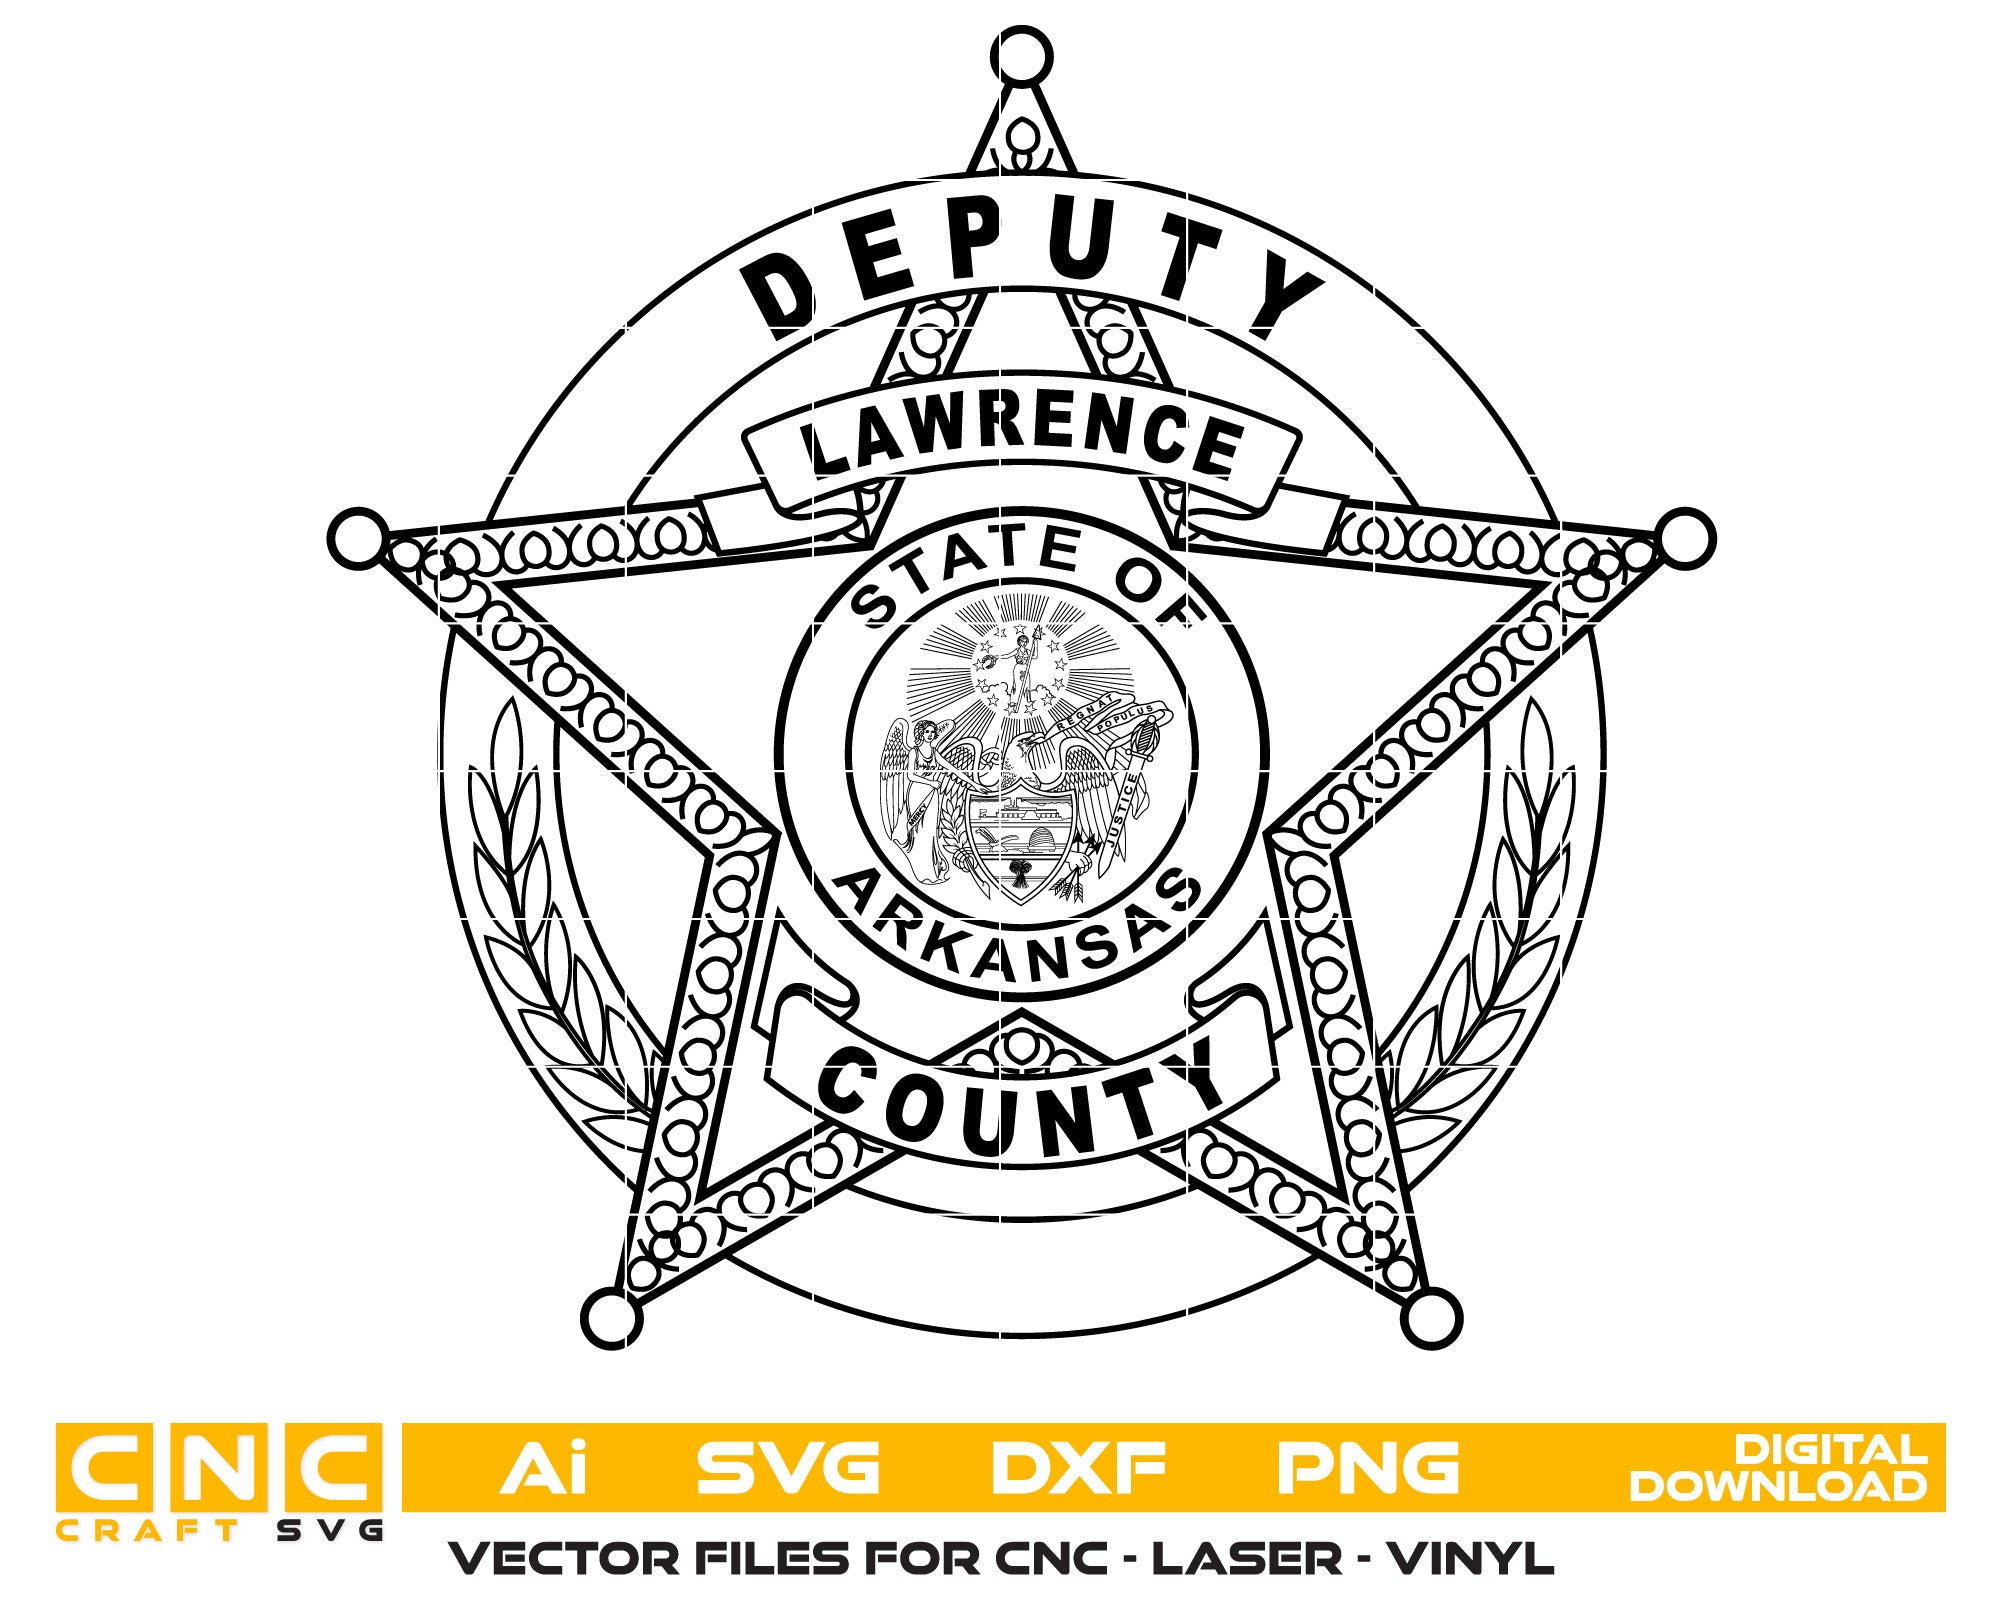 Arkansas Lawrence County Deputy Sheriff Badge vector art